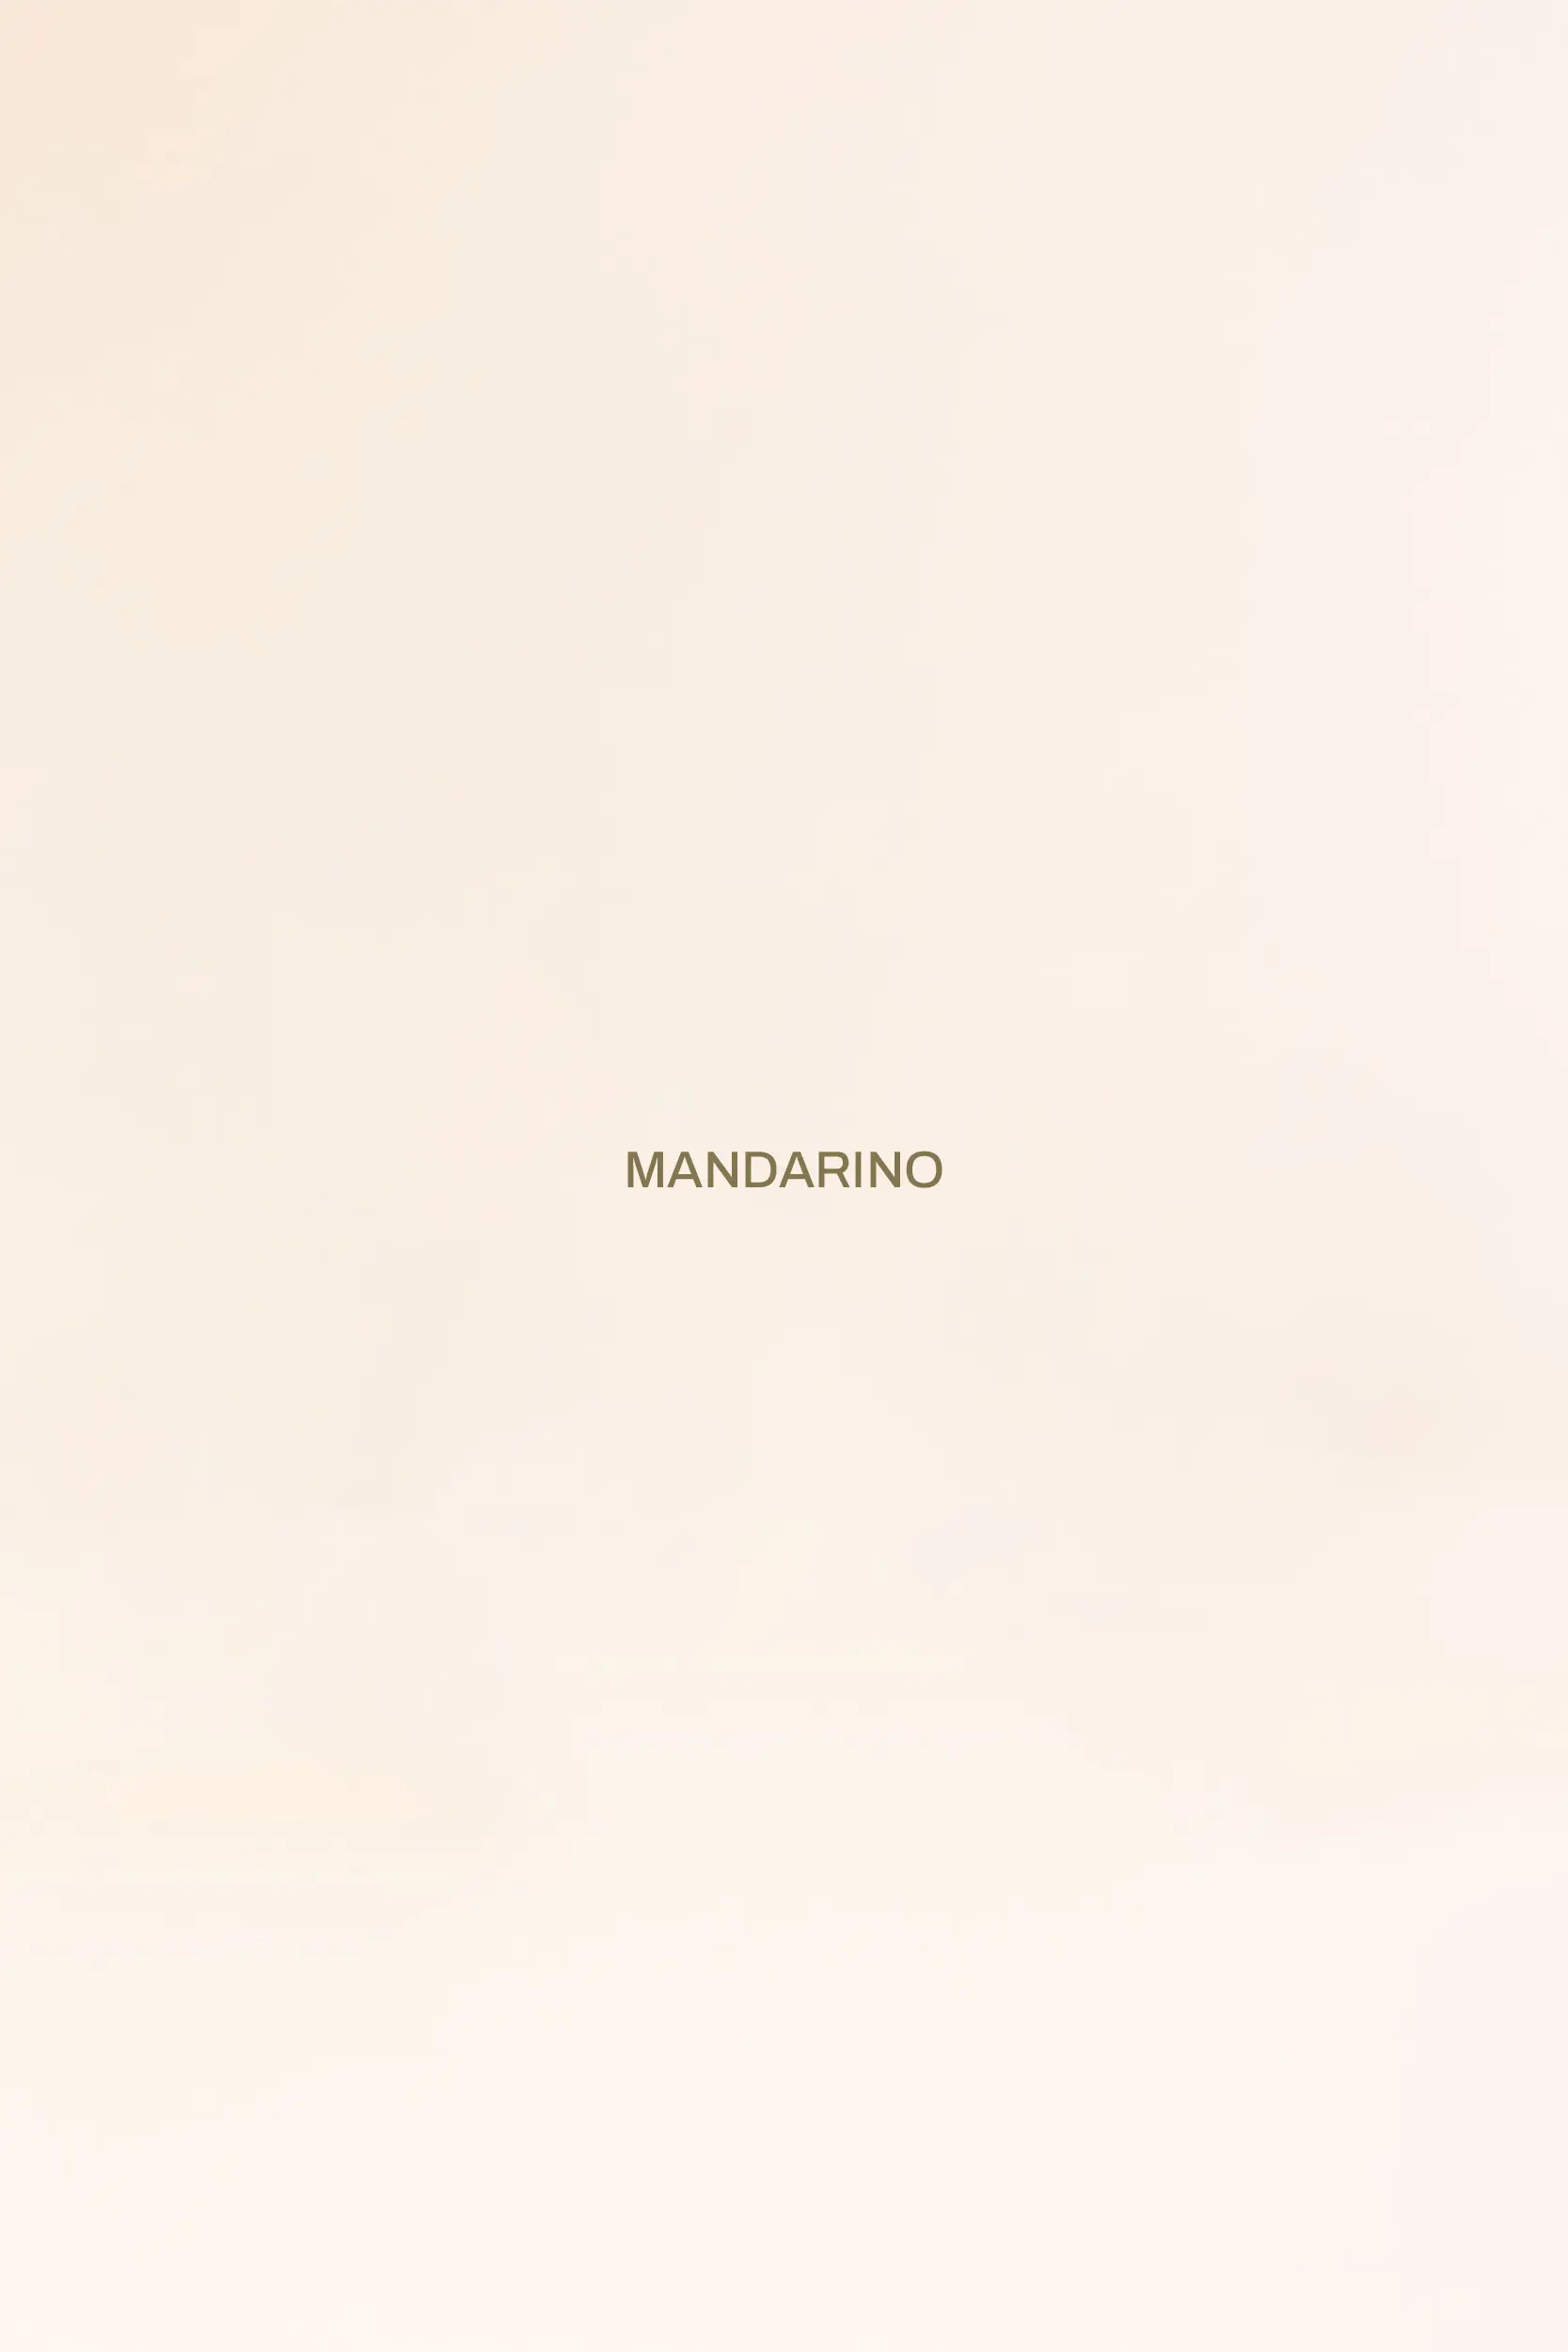 Pasticceria Citterio - Macarons - Mandarino